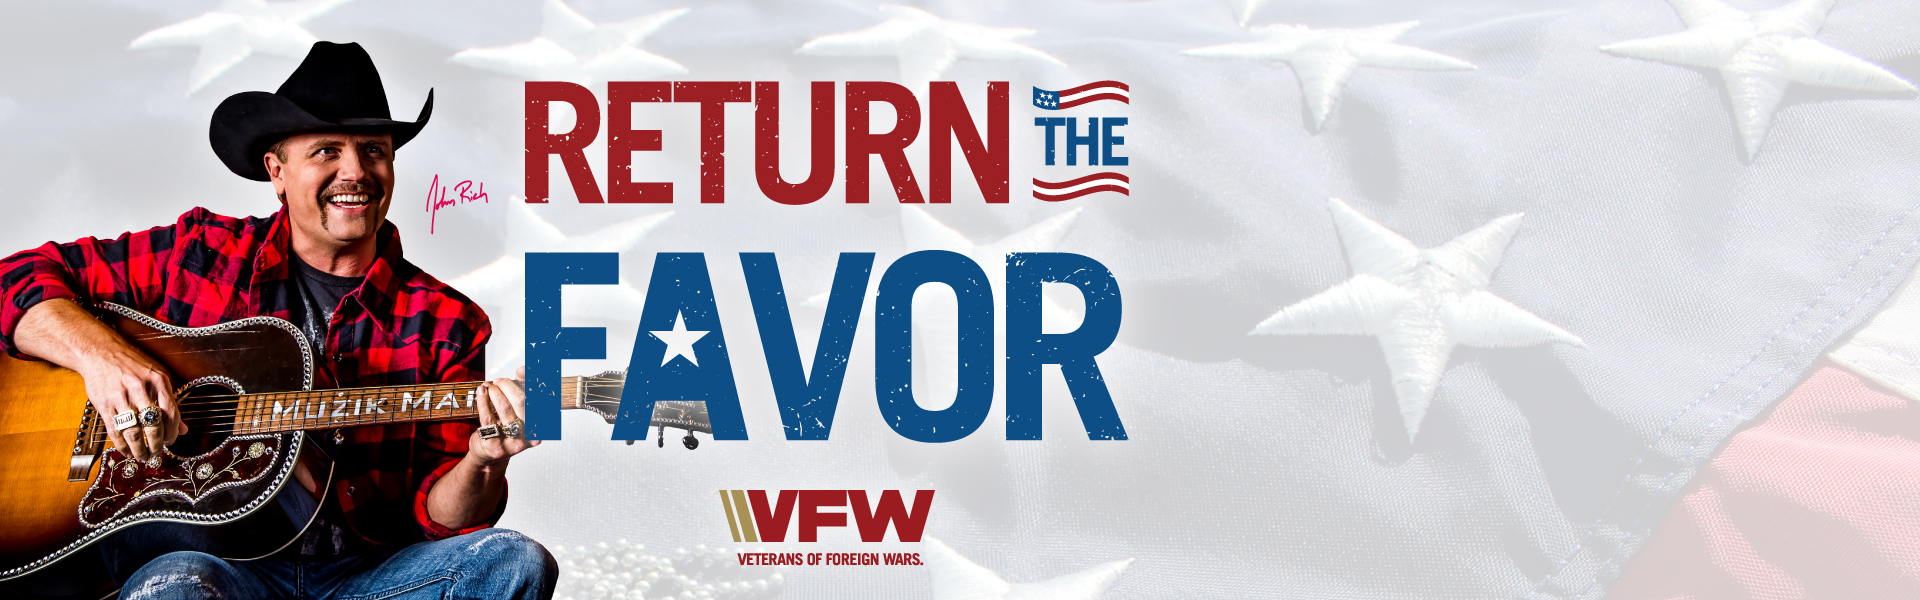 VFW Return the Favor John Rich